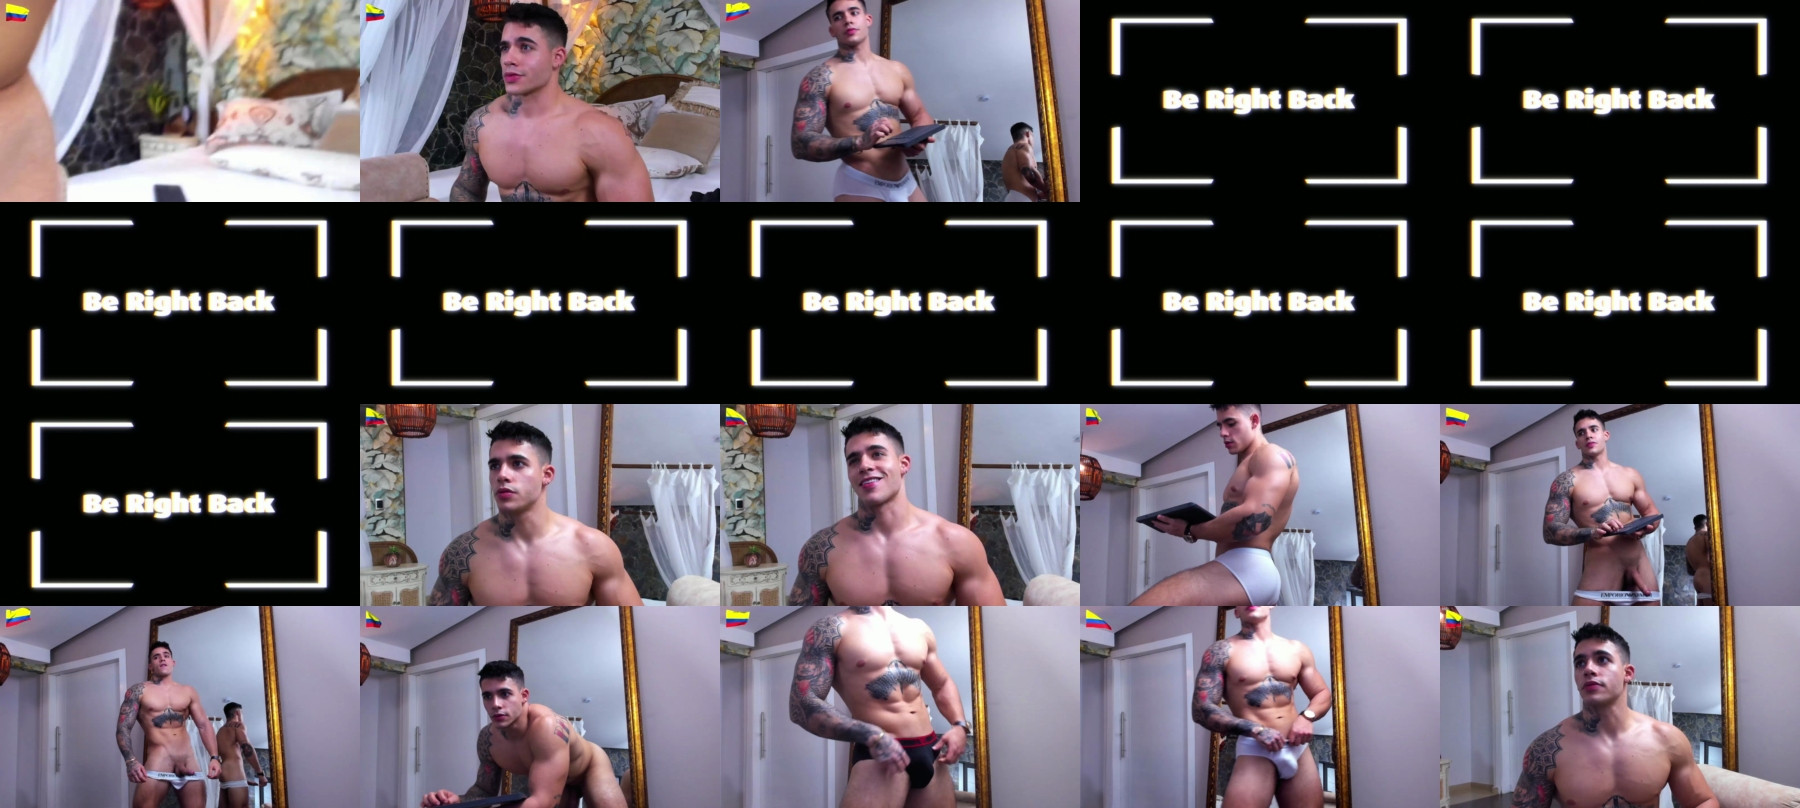 Dominic_Sullivan1  23-06-2021 Male Naked